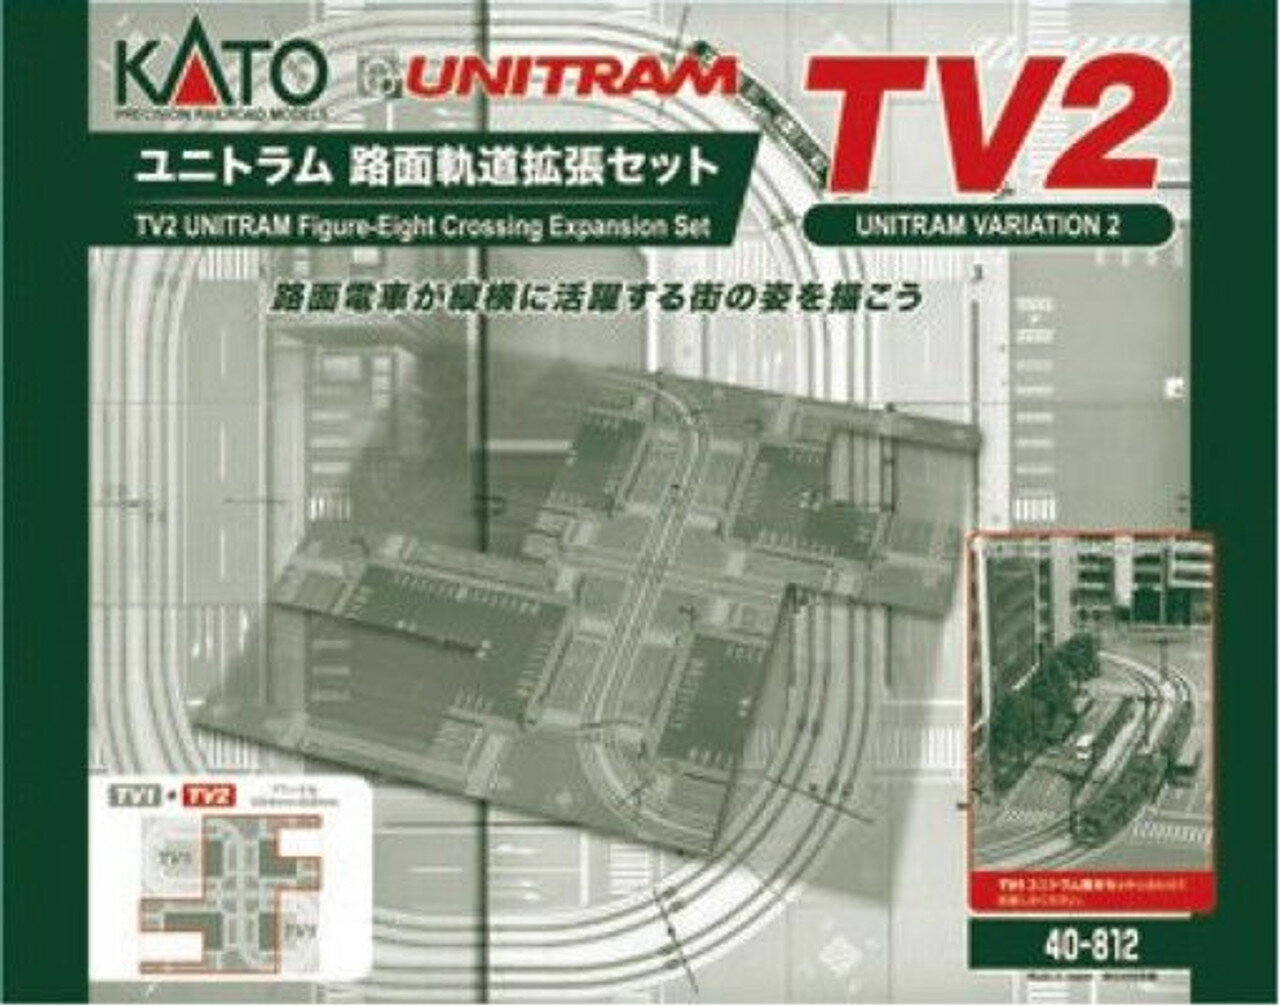 KATO TV2 ユニトラム路面軌道拡張セット #40-812